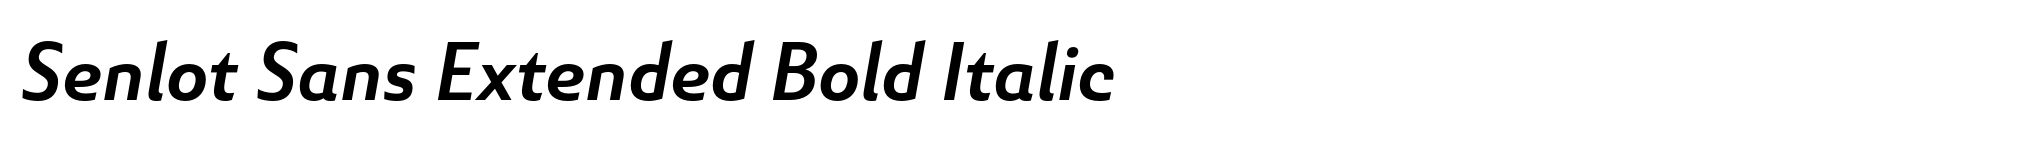 Senlot Sans Extended Bold Italic image